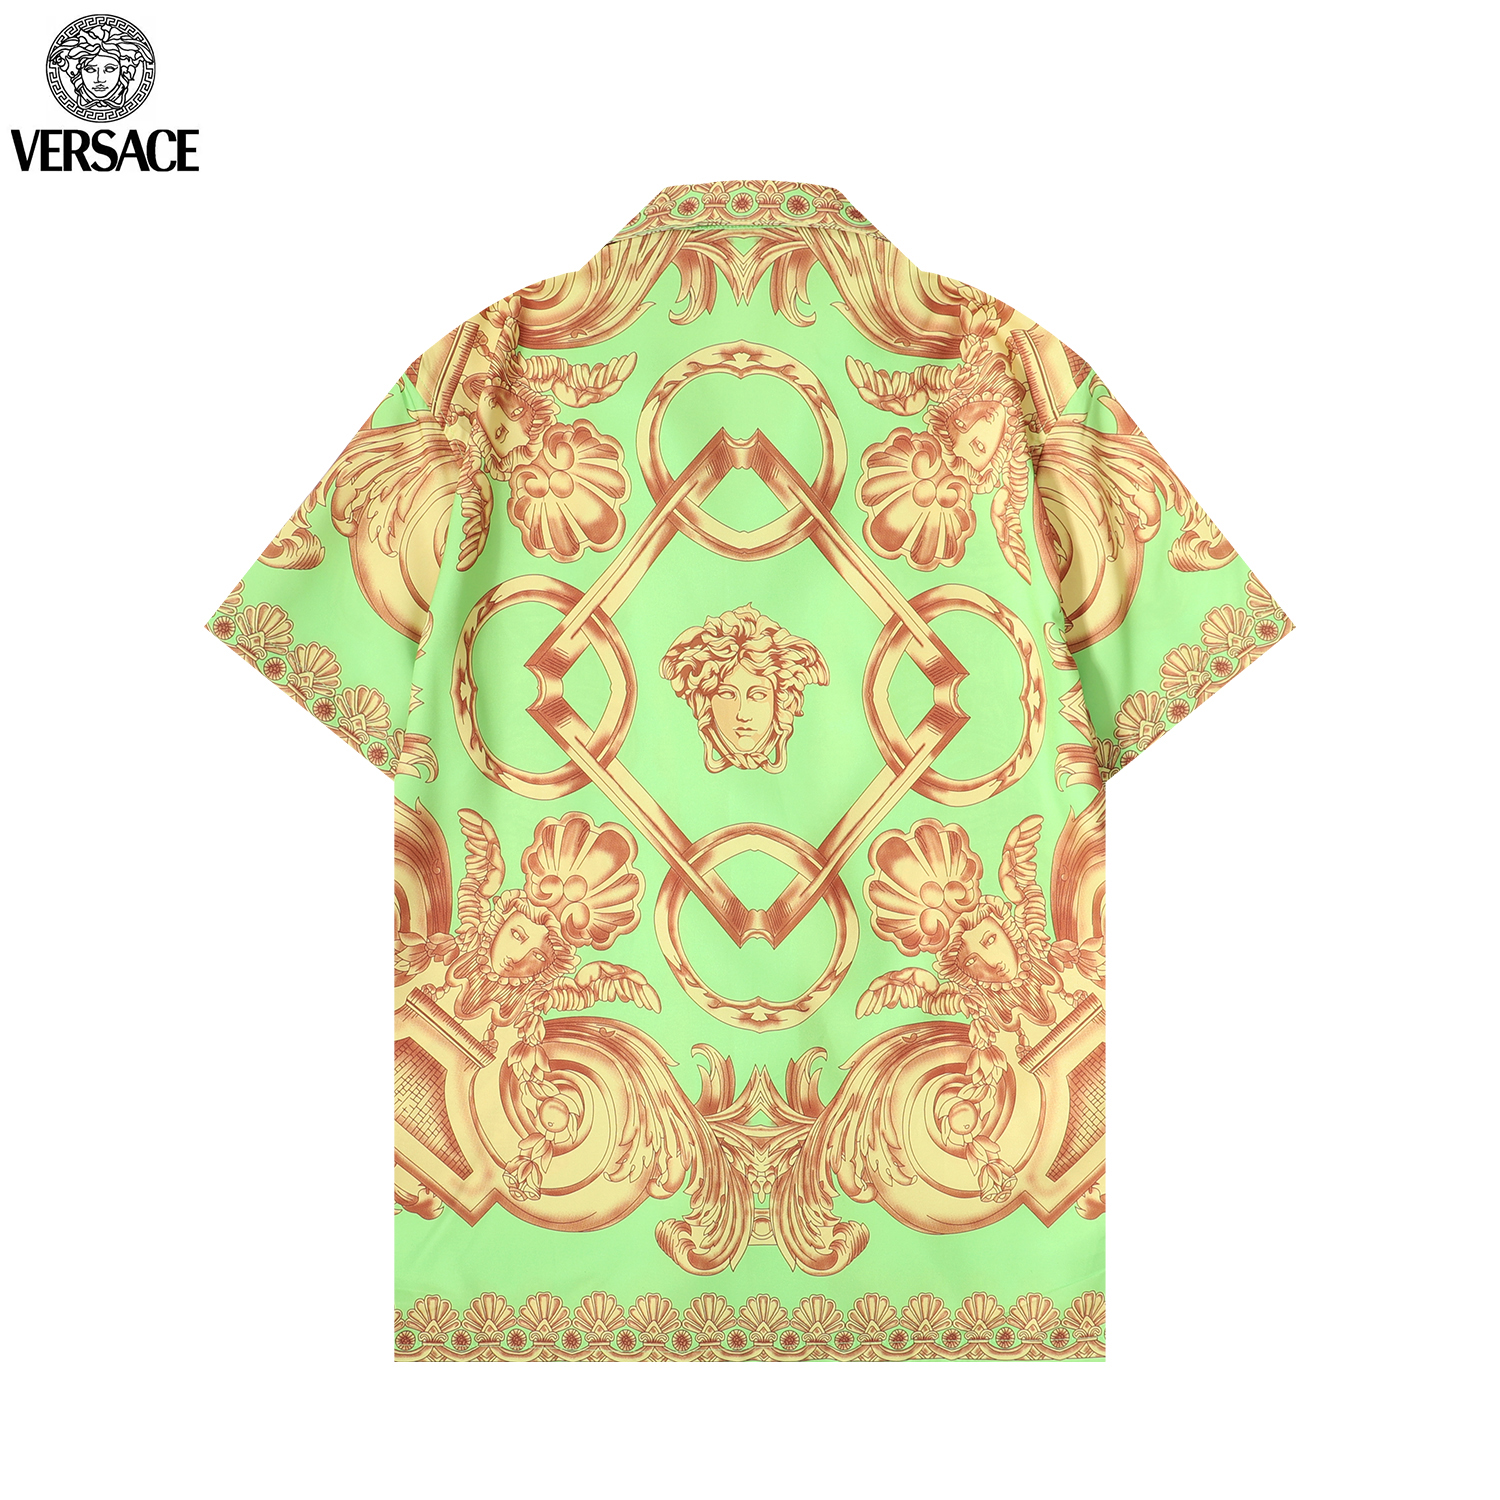 Versace Short Sleeve Shirts Unisex # 263818, cheap Versace Shirts, only $32!